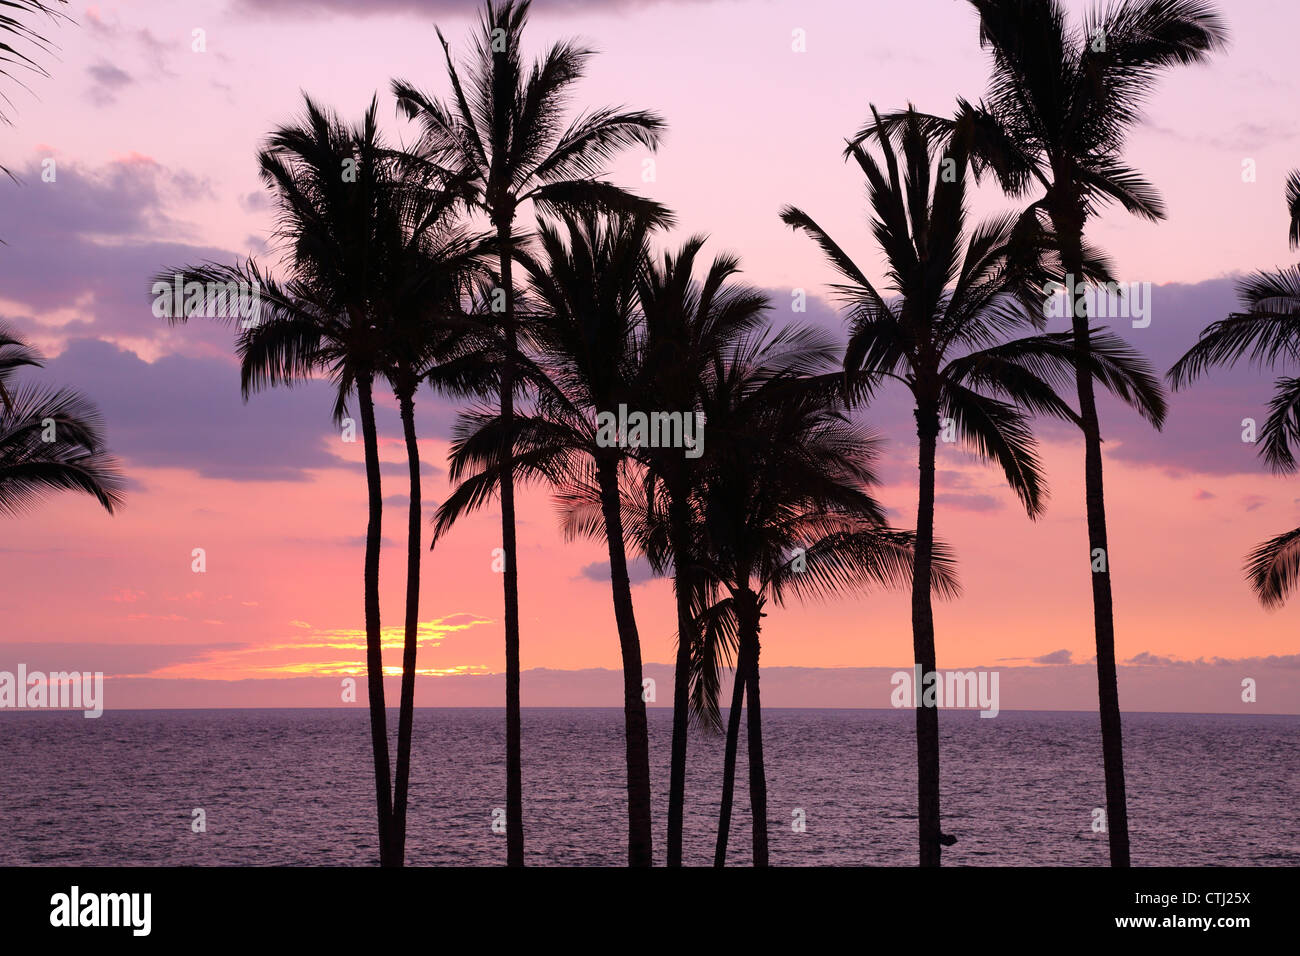 Palm trees at sunset, Hawaii Stock Photo